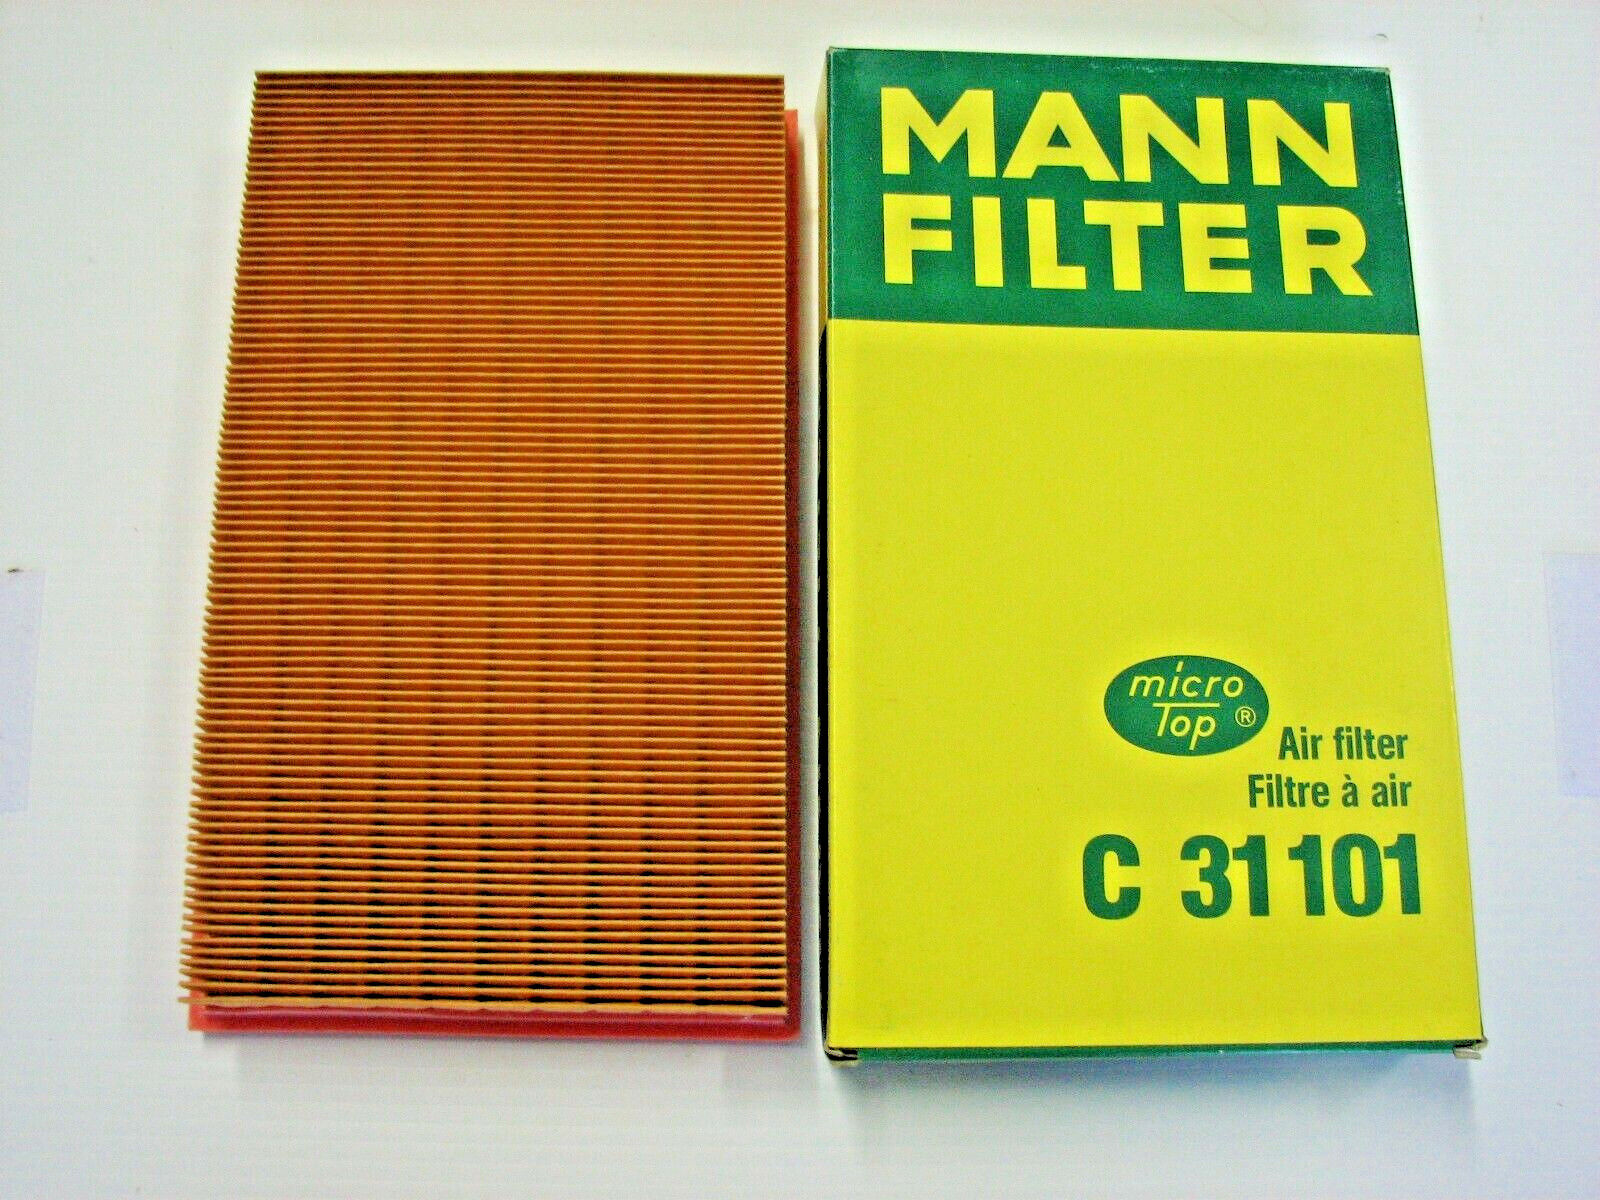 PORSCHE 944 AIR FILTER / MANN C 31101  FITS 944 1983-89 2.5L P/N 944 110 186 02